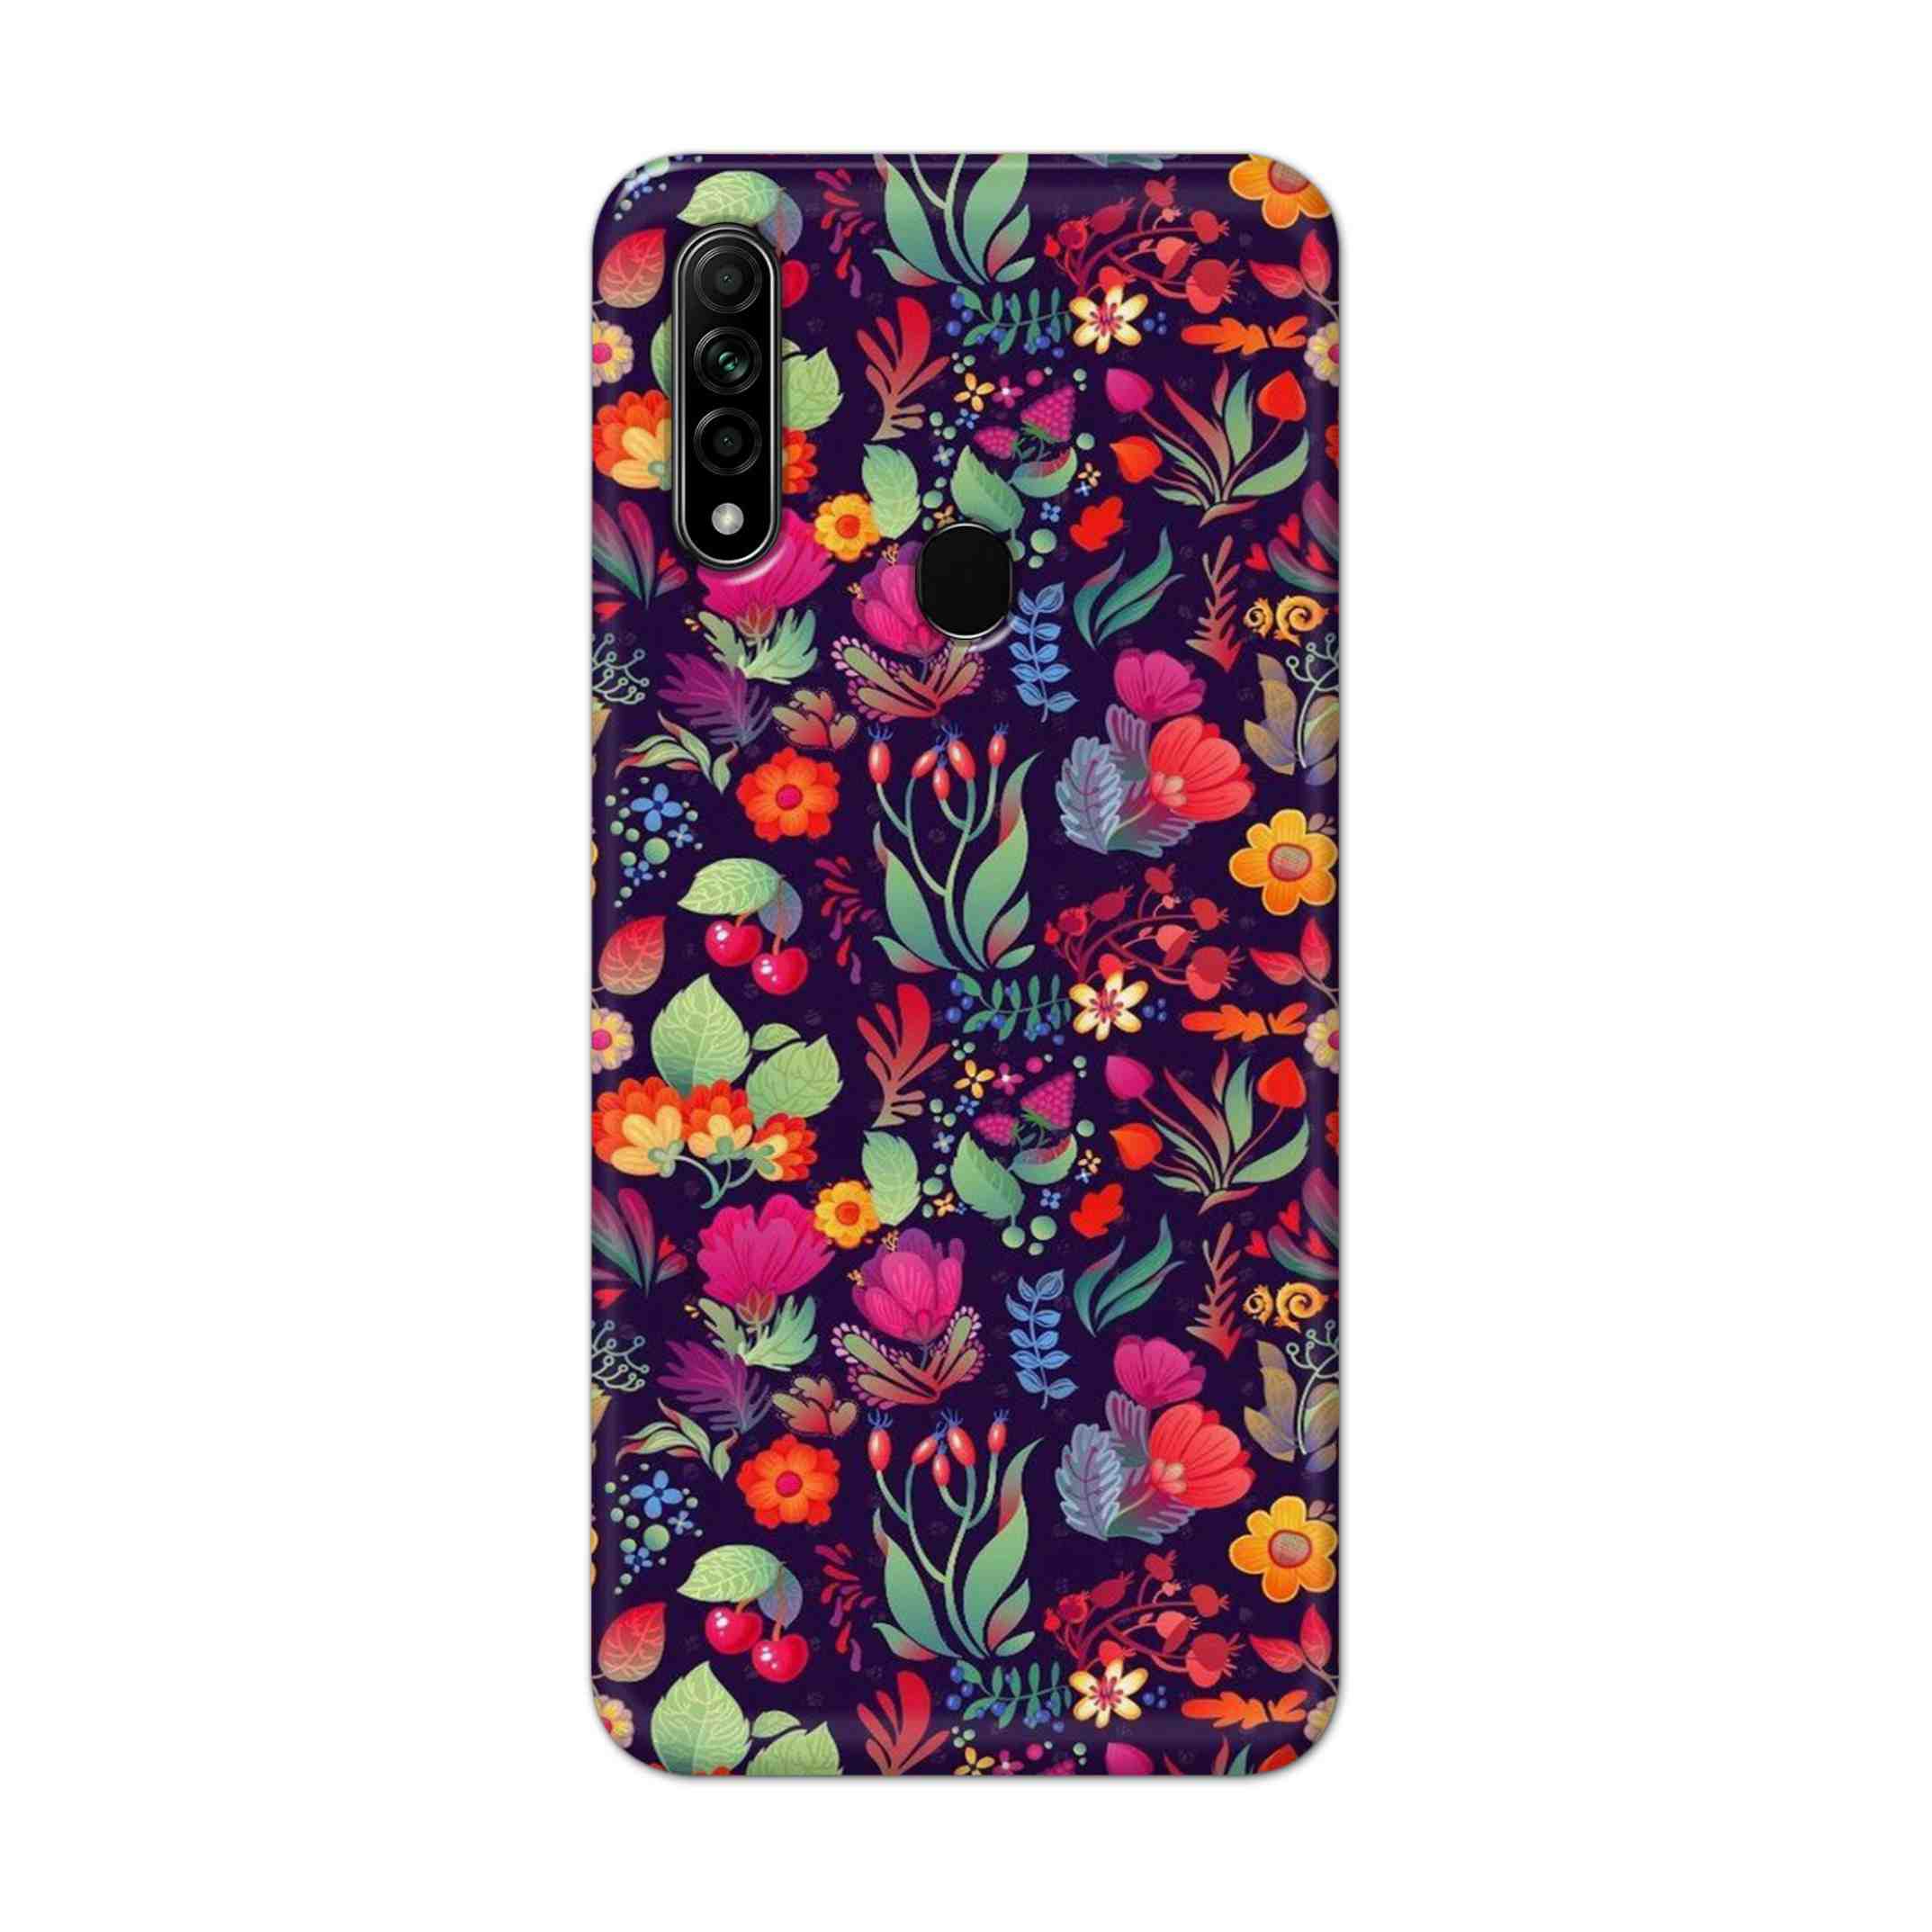 Buy Fruits Flower Hard Back Mobile Phone Case Cover For Oppo A31 (2020) Online